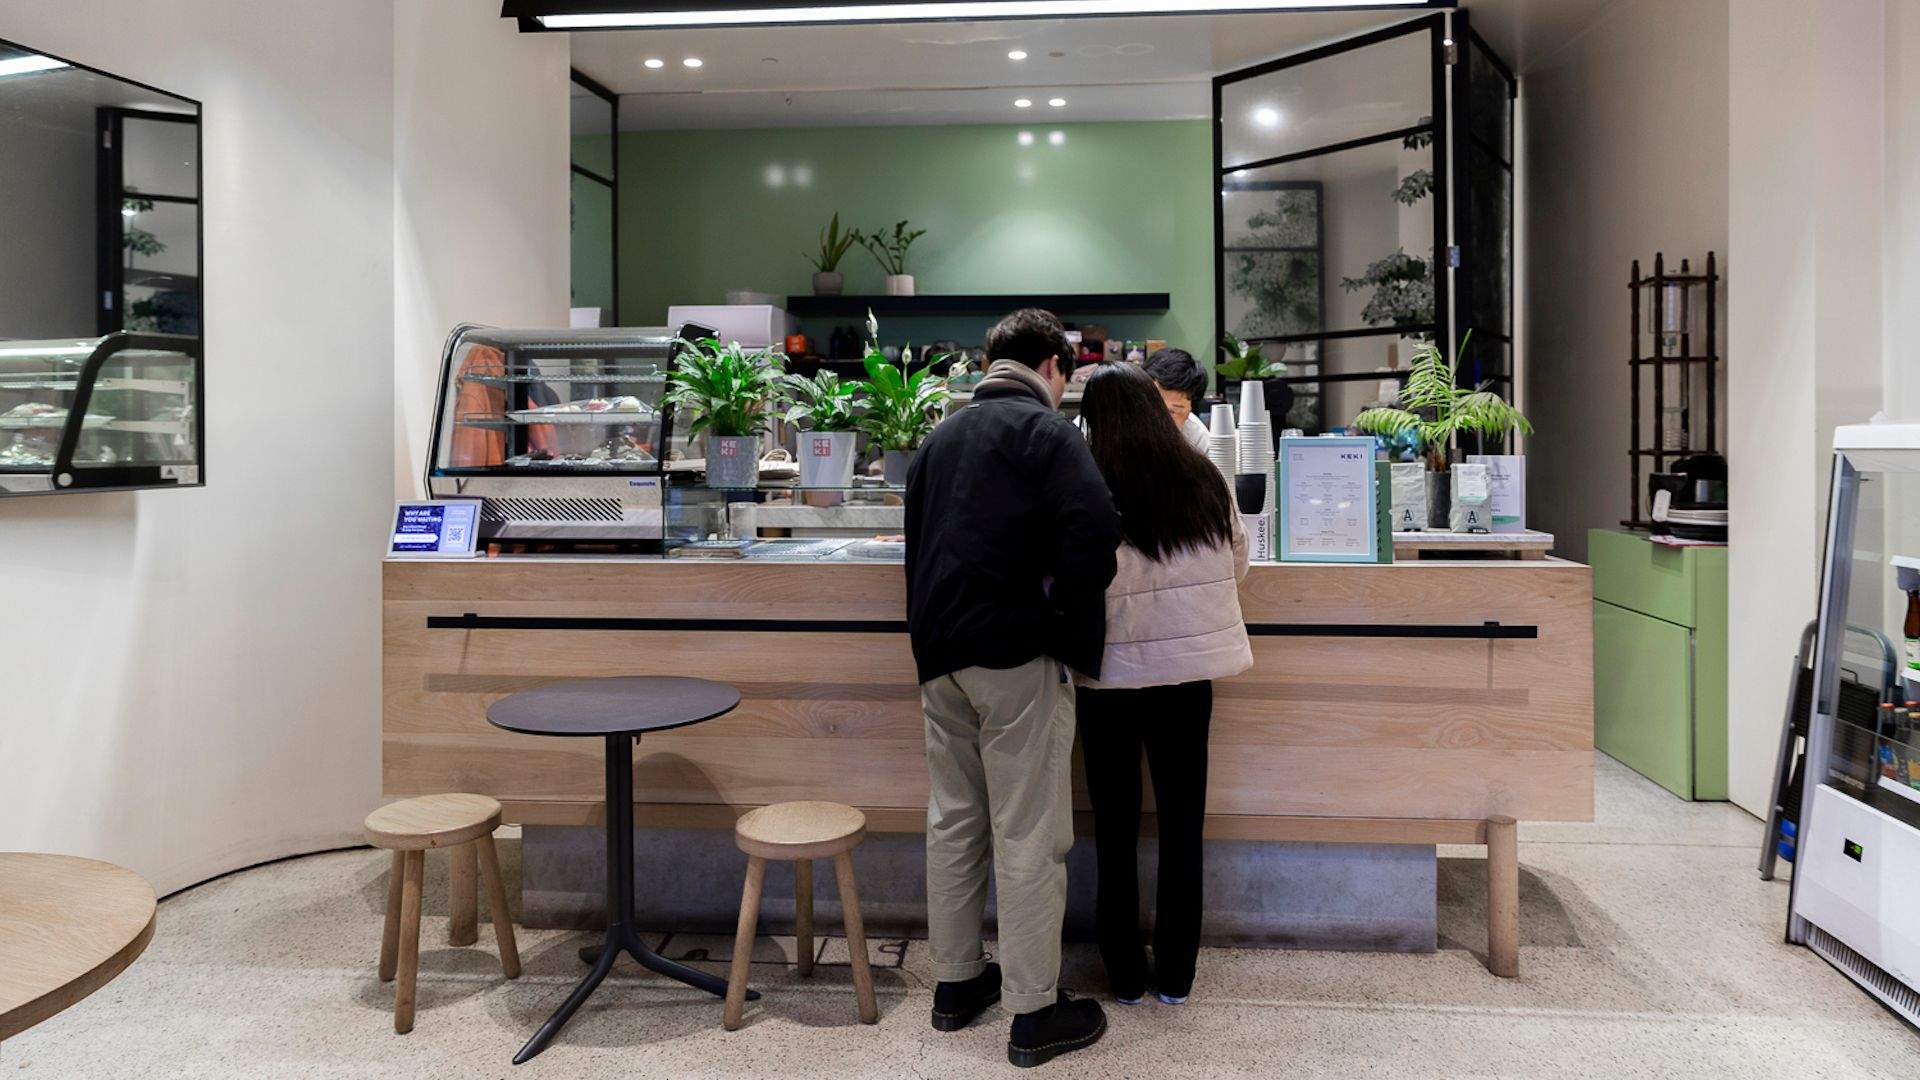 Keki Milkbar Is Melbourne CBD's New Cafe Dedicated to Fluffy Soufflé Pancakes